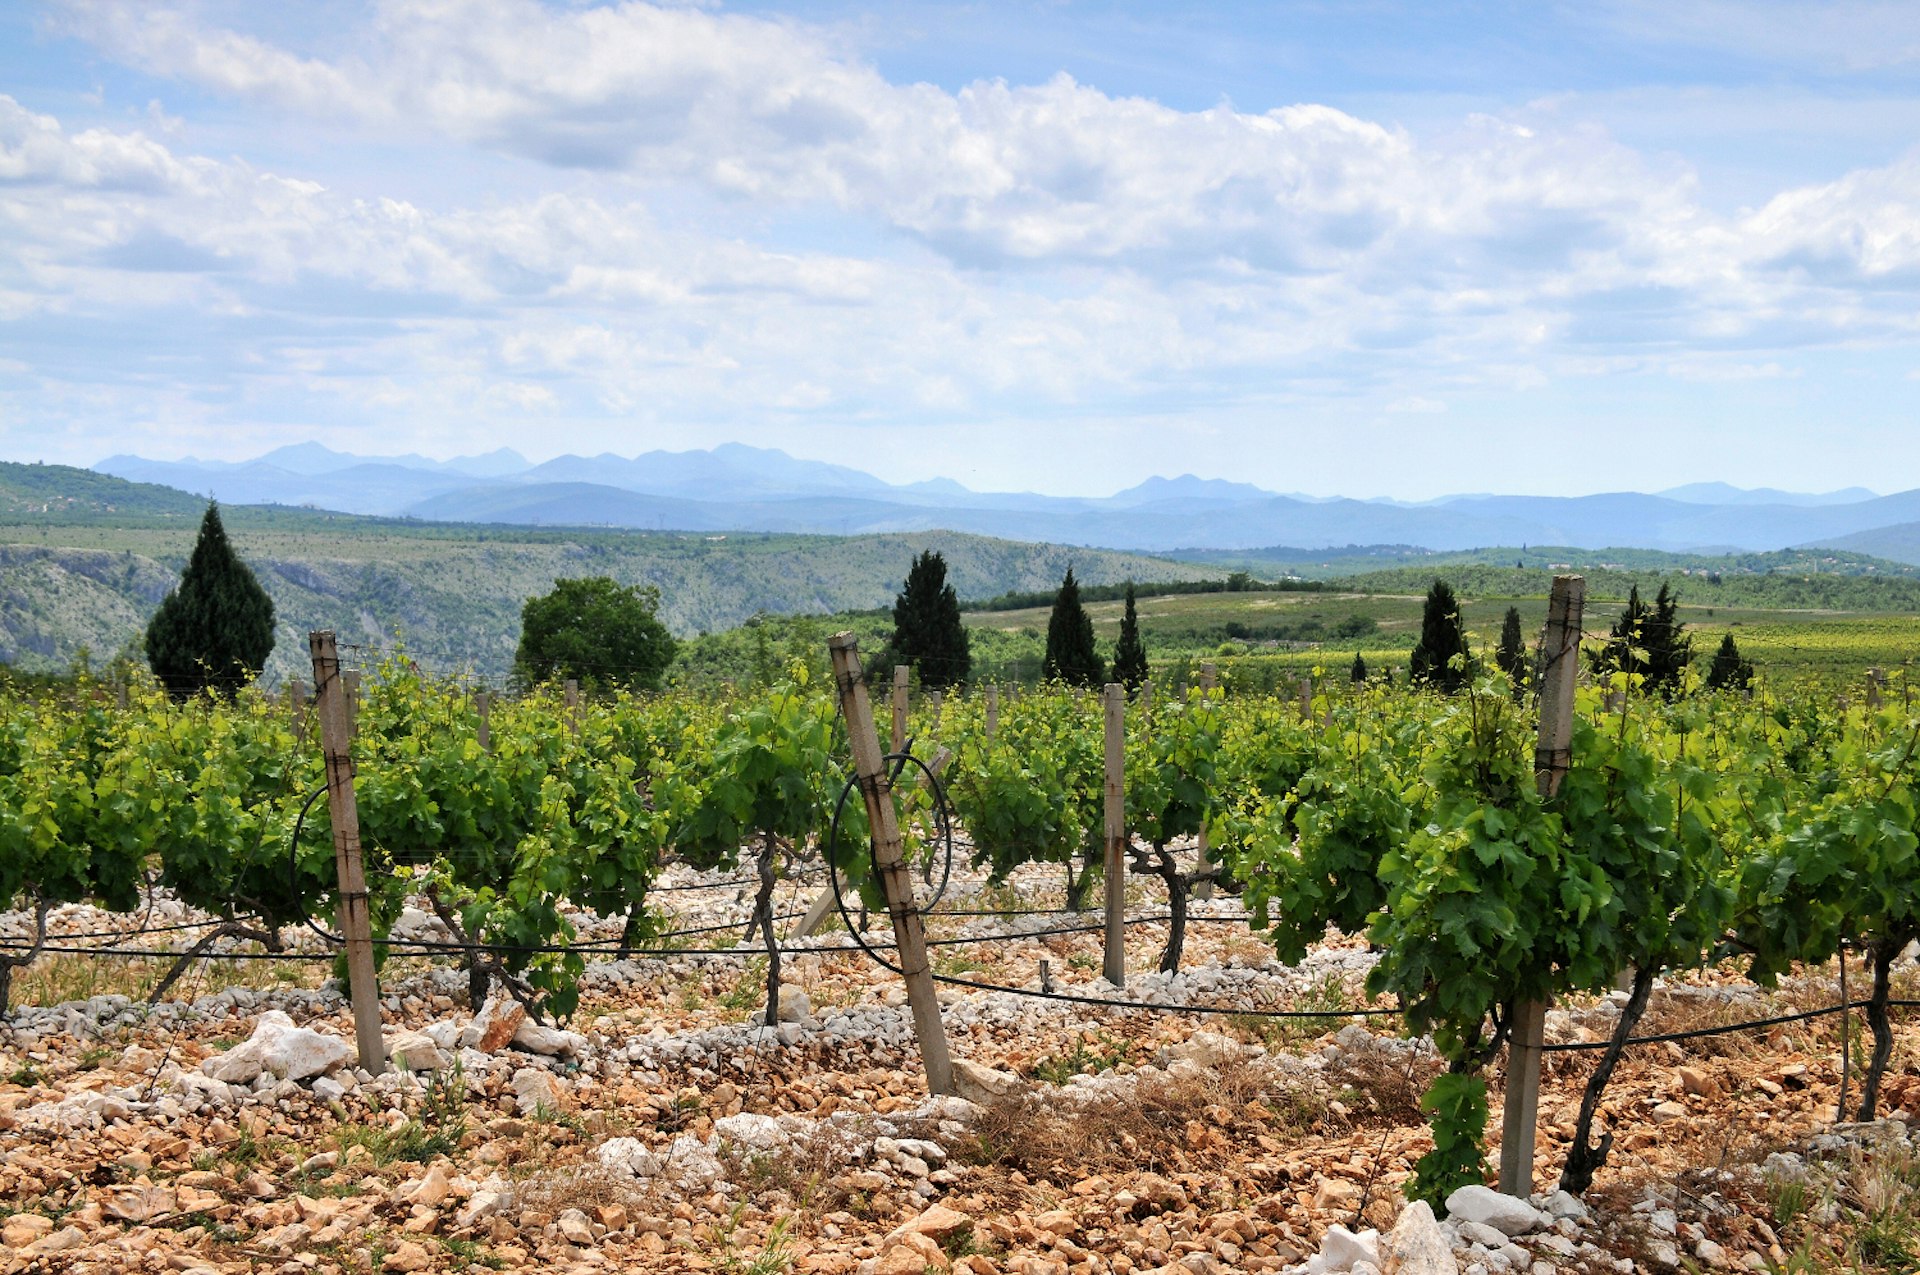 Vineyard near Međugorje in Hercegovina. Image by Thomas Stankiewicz / LOOK-foto / Getty